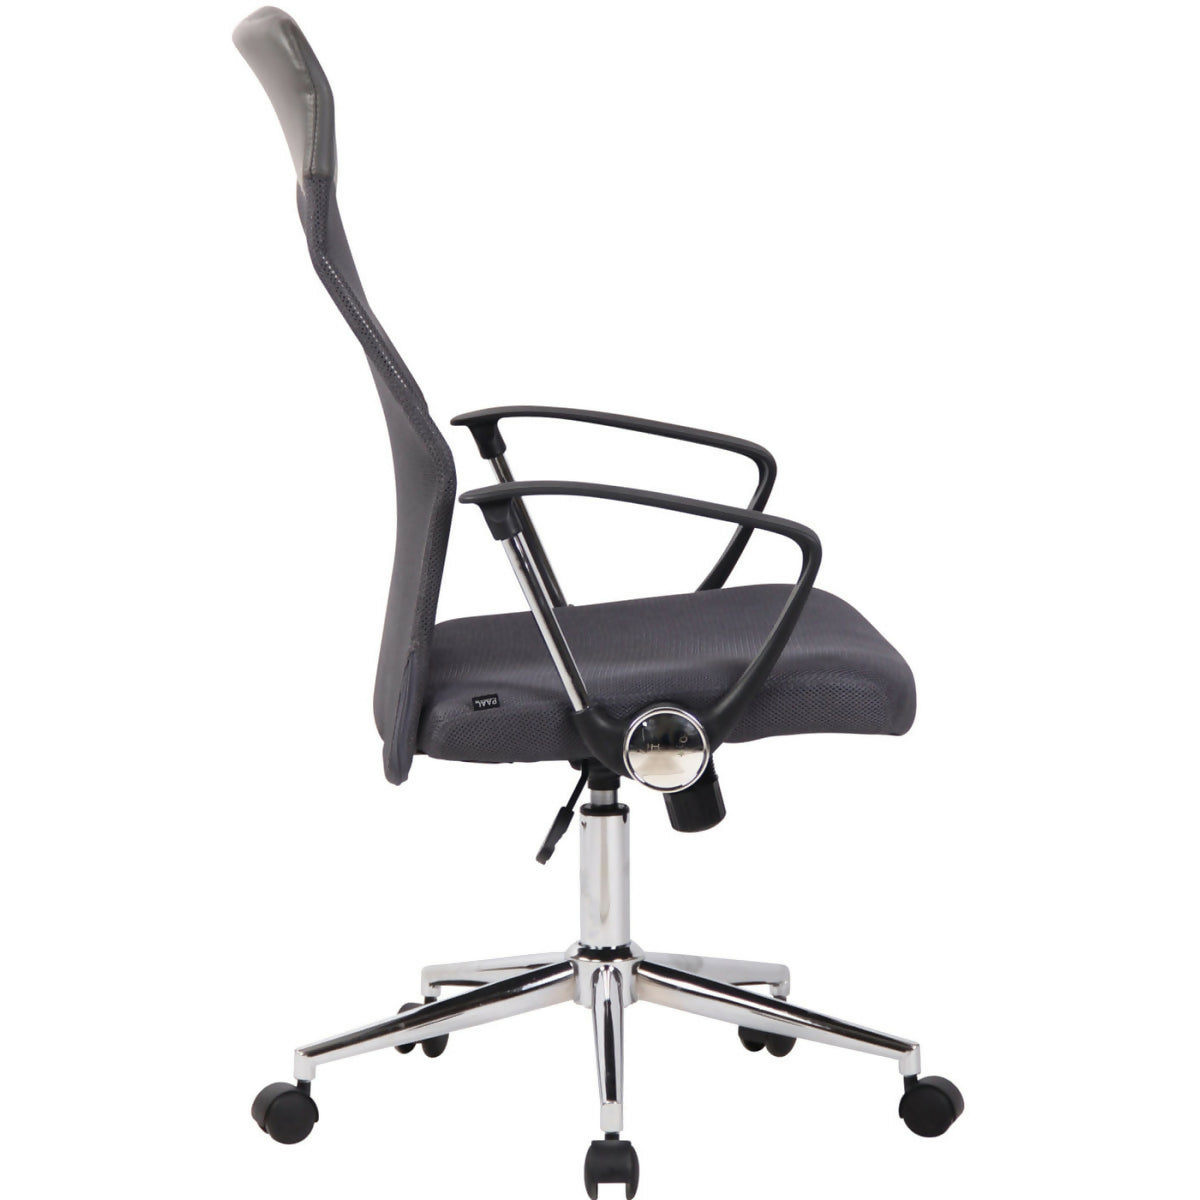 Korba office chair - Gray fabric